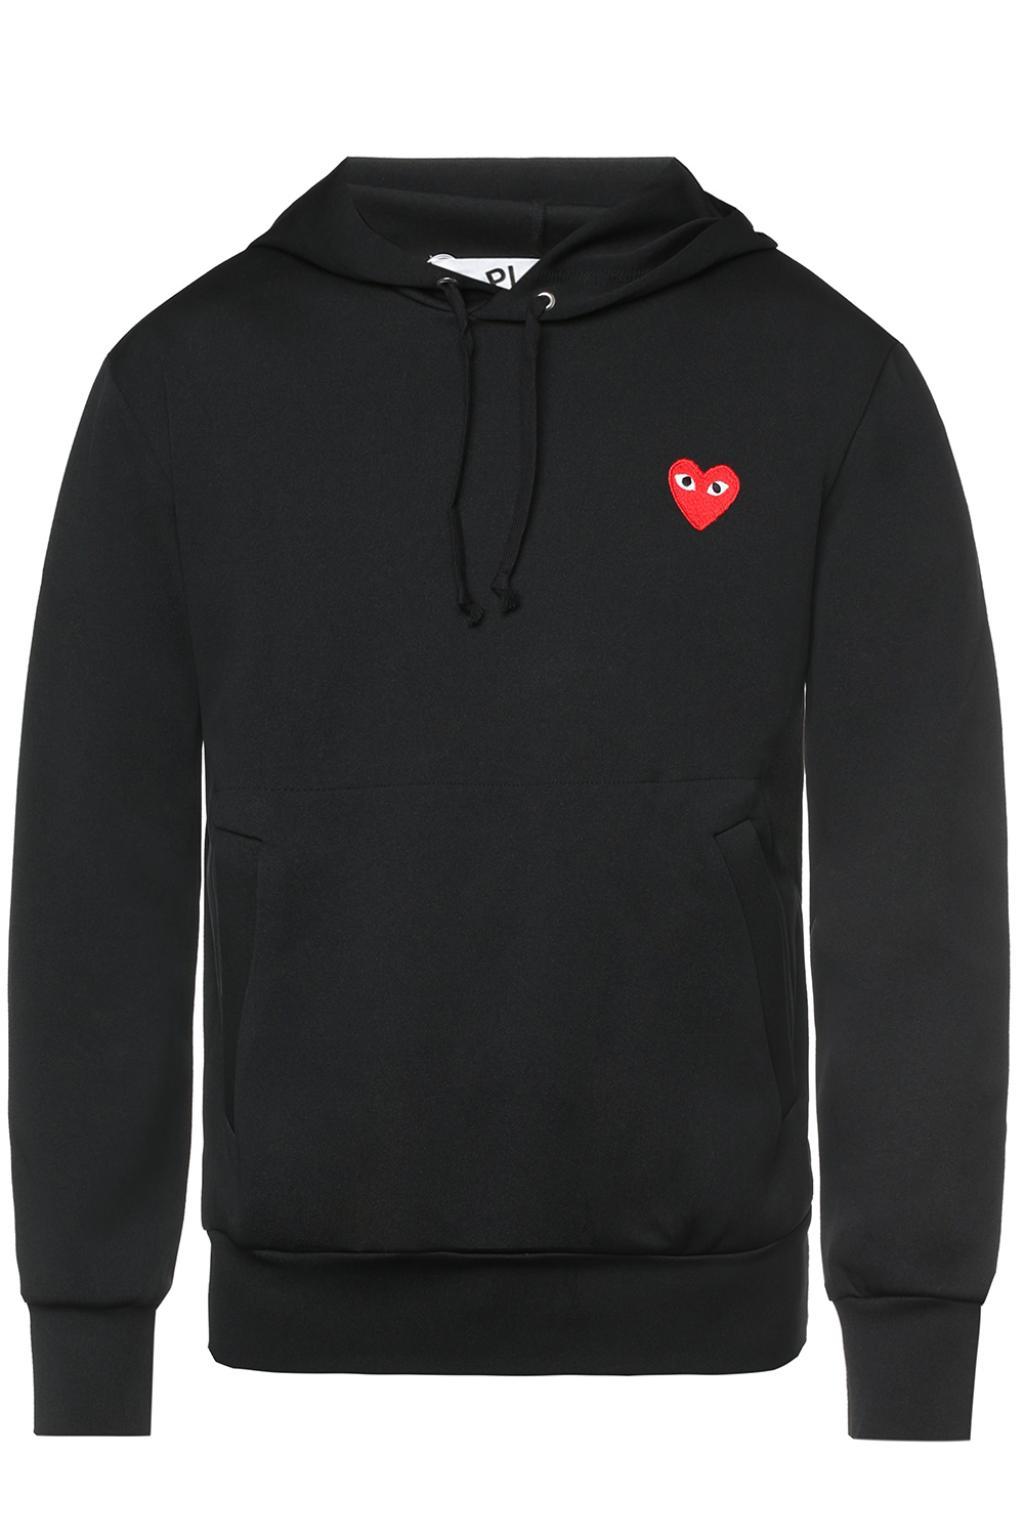 COMME DES GARÇONS PLAY Hooded Sweatshirt in Black for Men - Lyst